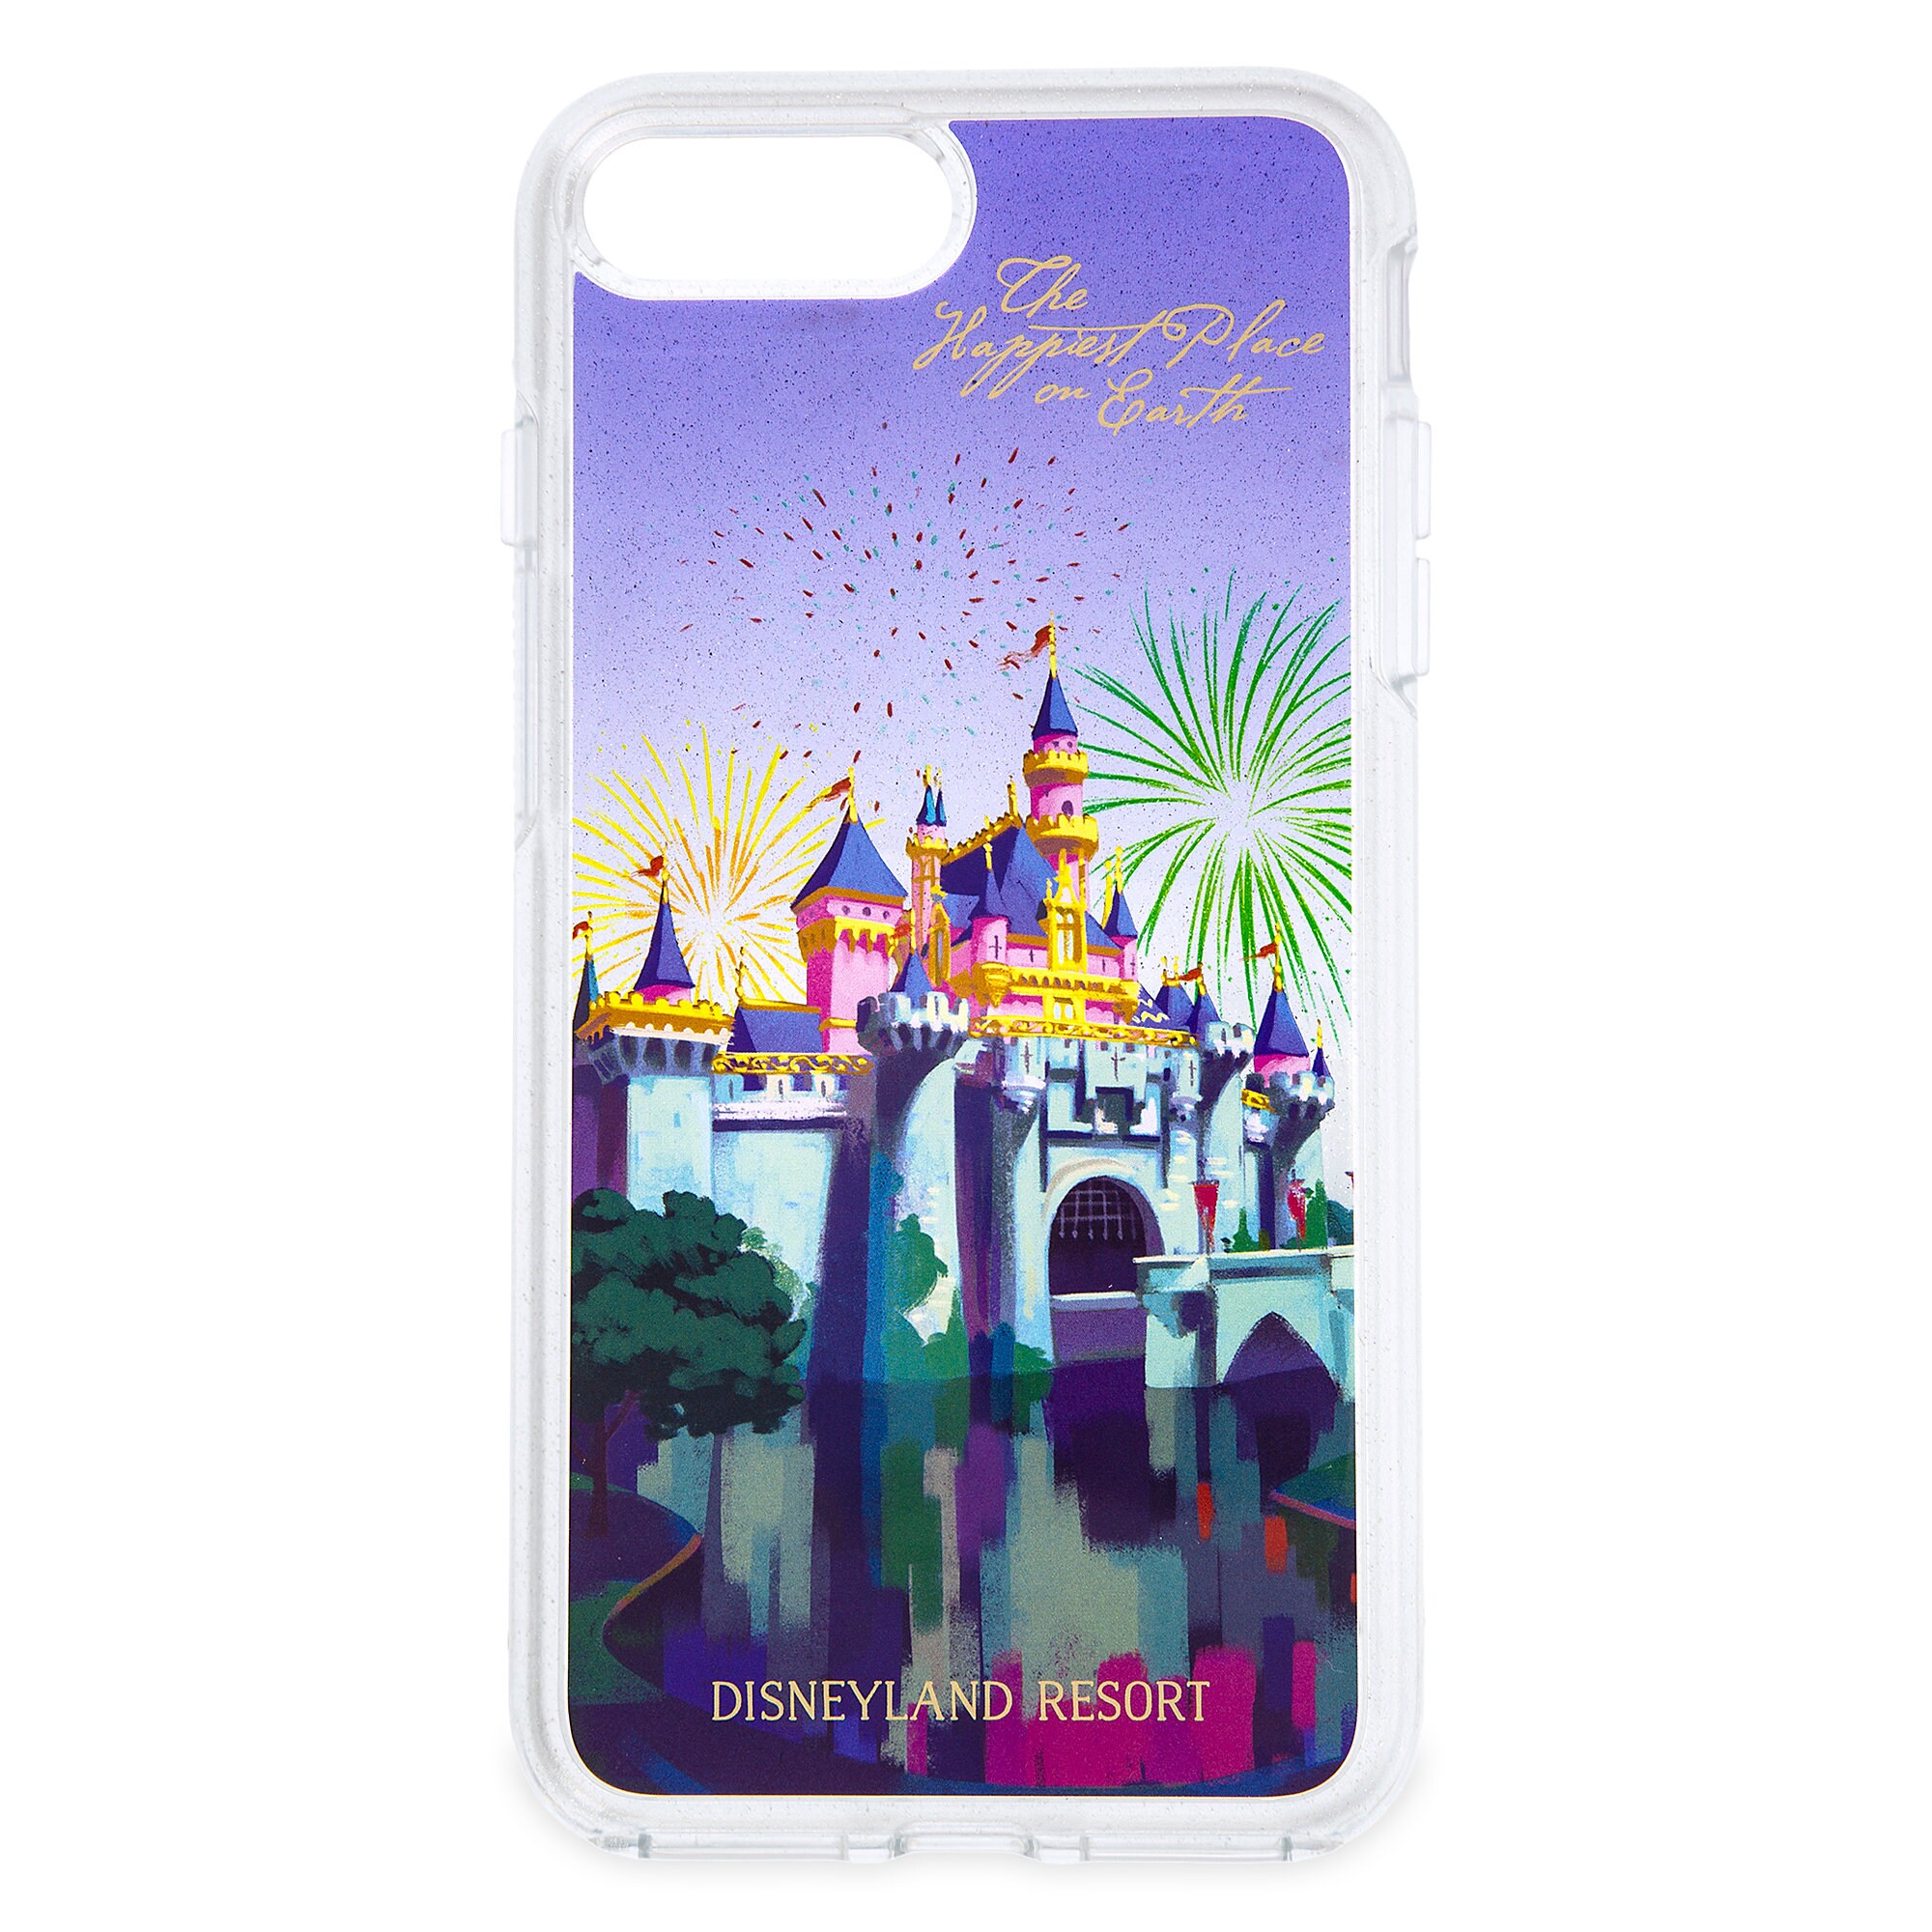 Sleeping Beauty Castle iPhone 8 Plus/7 Plus Case by OtterBox - Disneyland